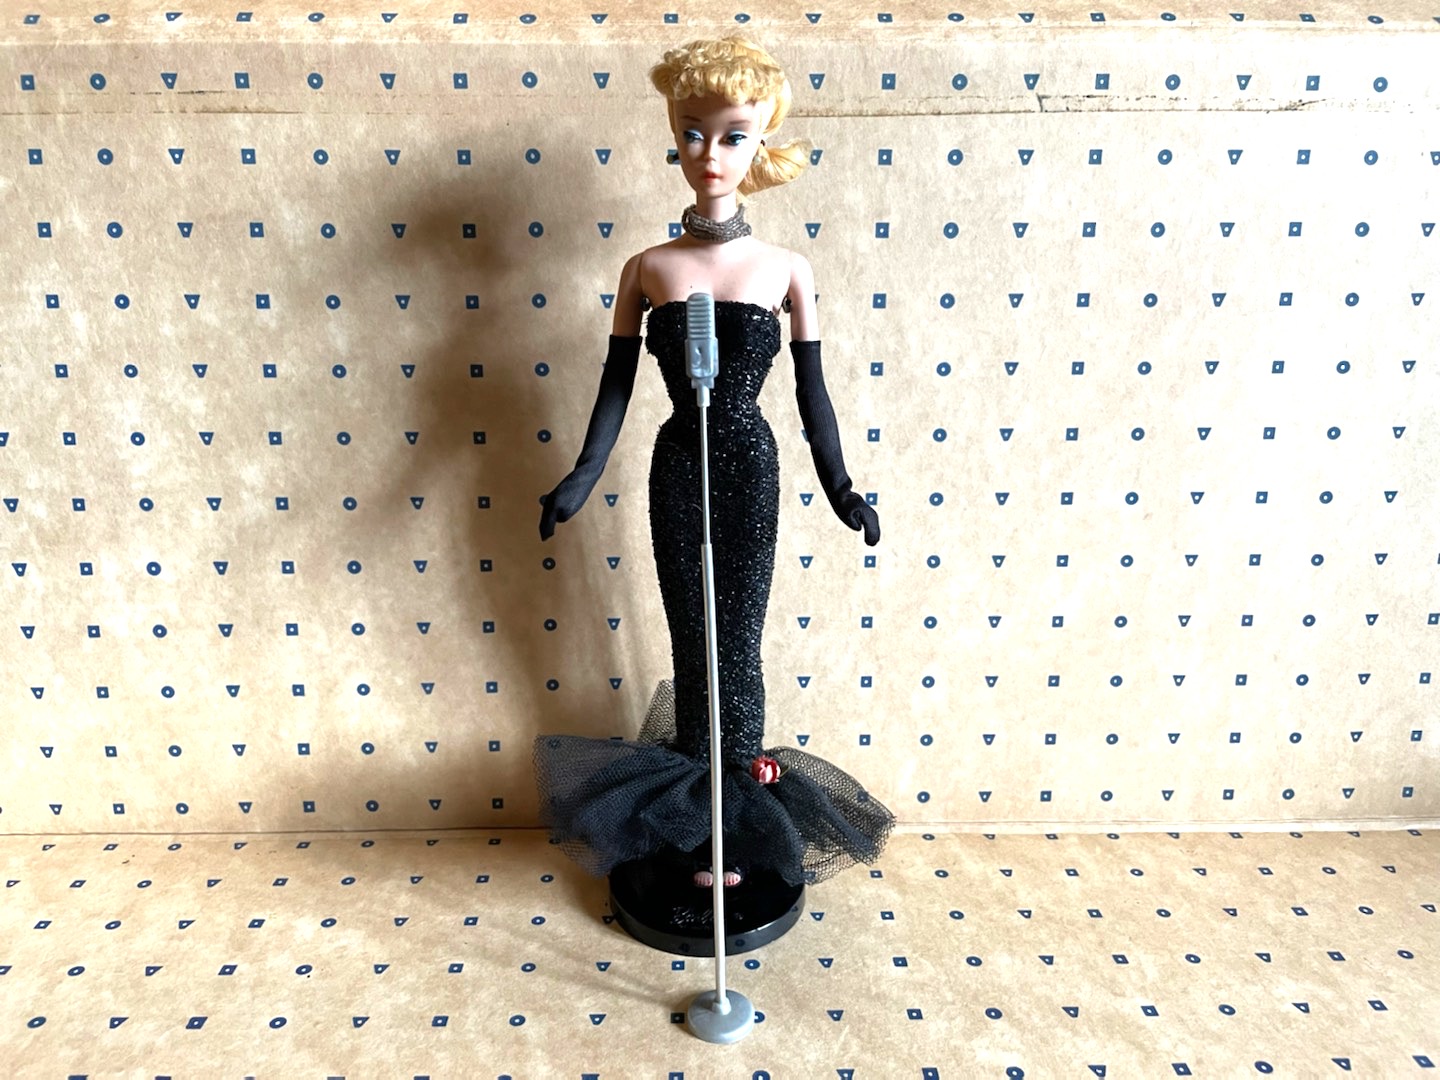 Garage Yard sale Barbie dolls vintage new and like new vinyl